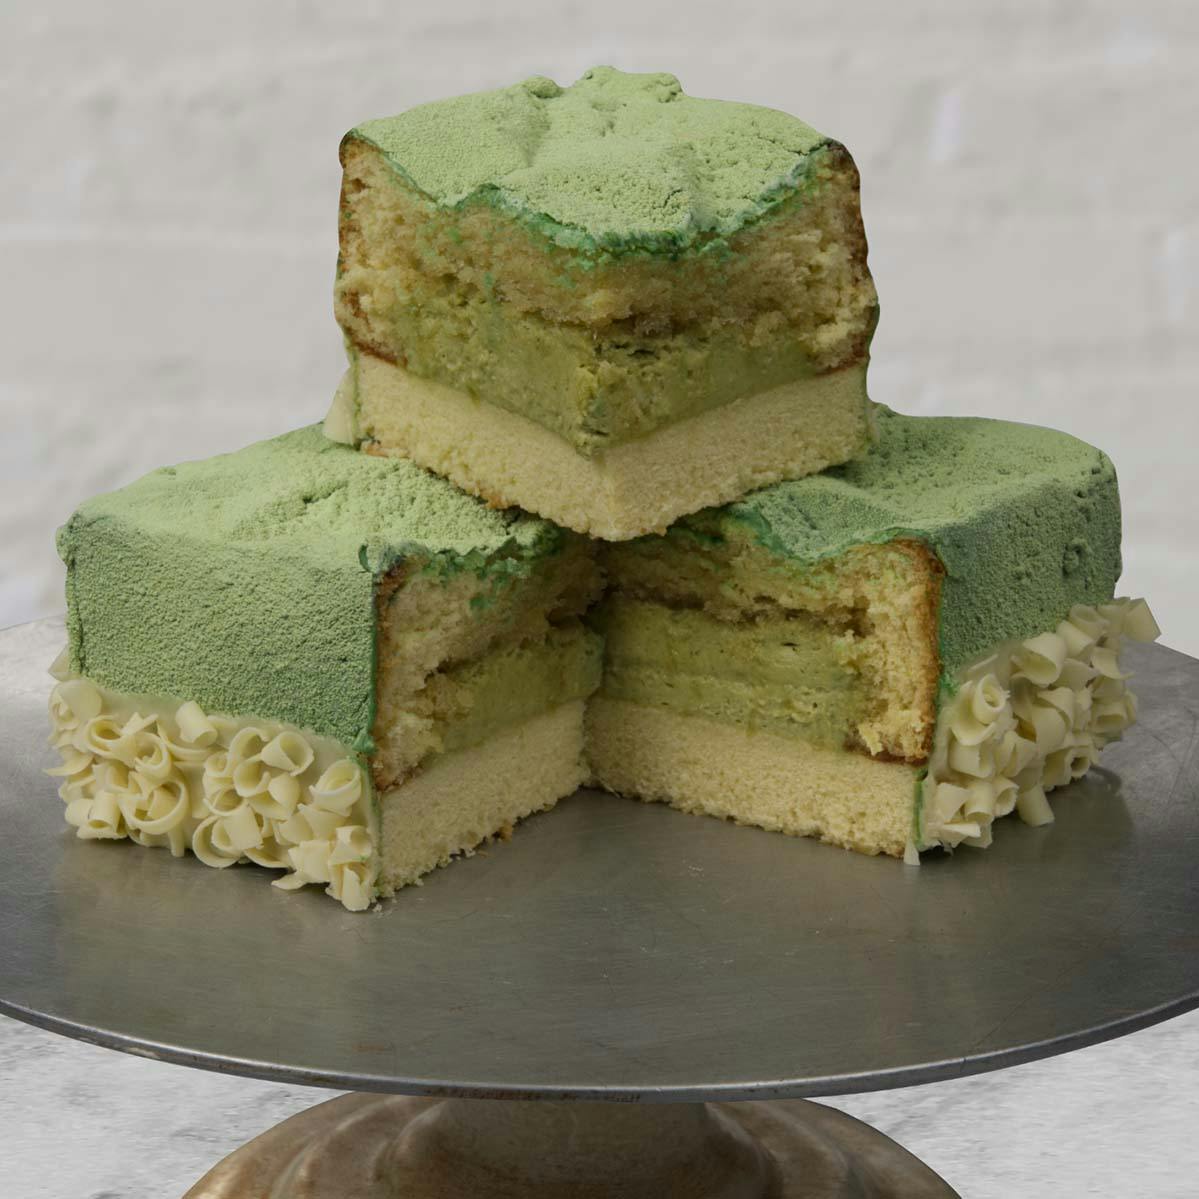 https://goldbelly.imgix.net/uploads/showcase_media_asset/image/162893/Knipschildt-The-Green-Lady-Sponge-Cake-3.jpg?ixlib=react-9.0.2&auto=format&ar=1%3A1